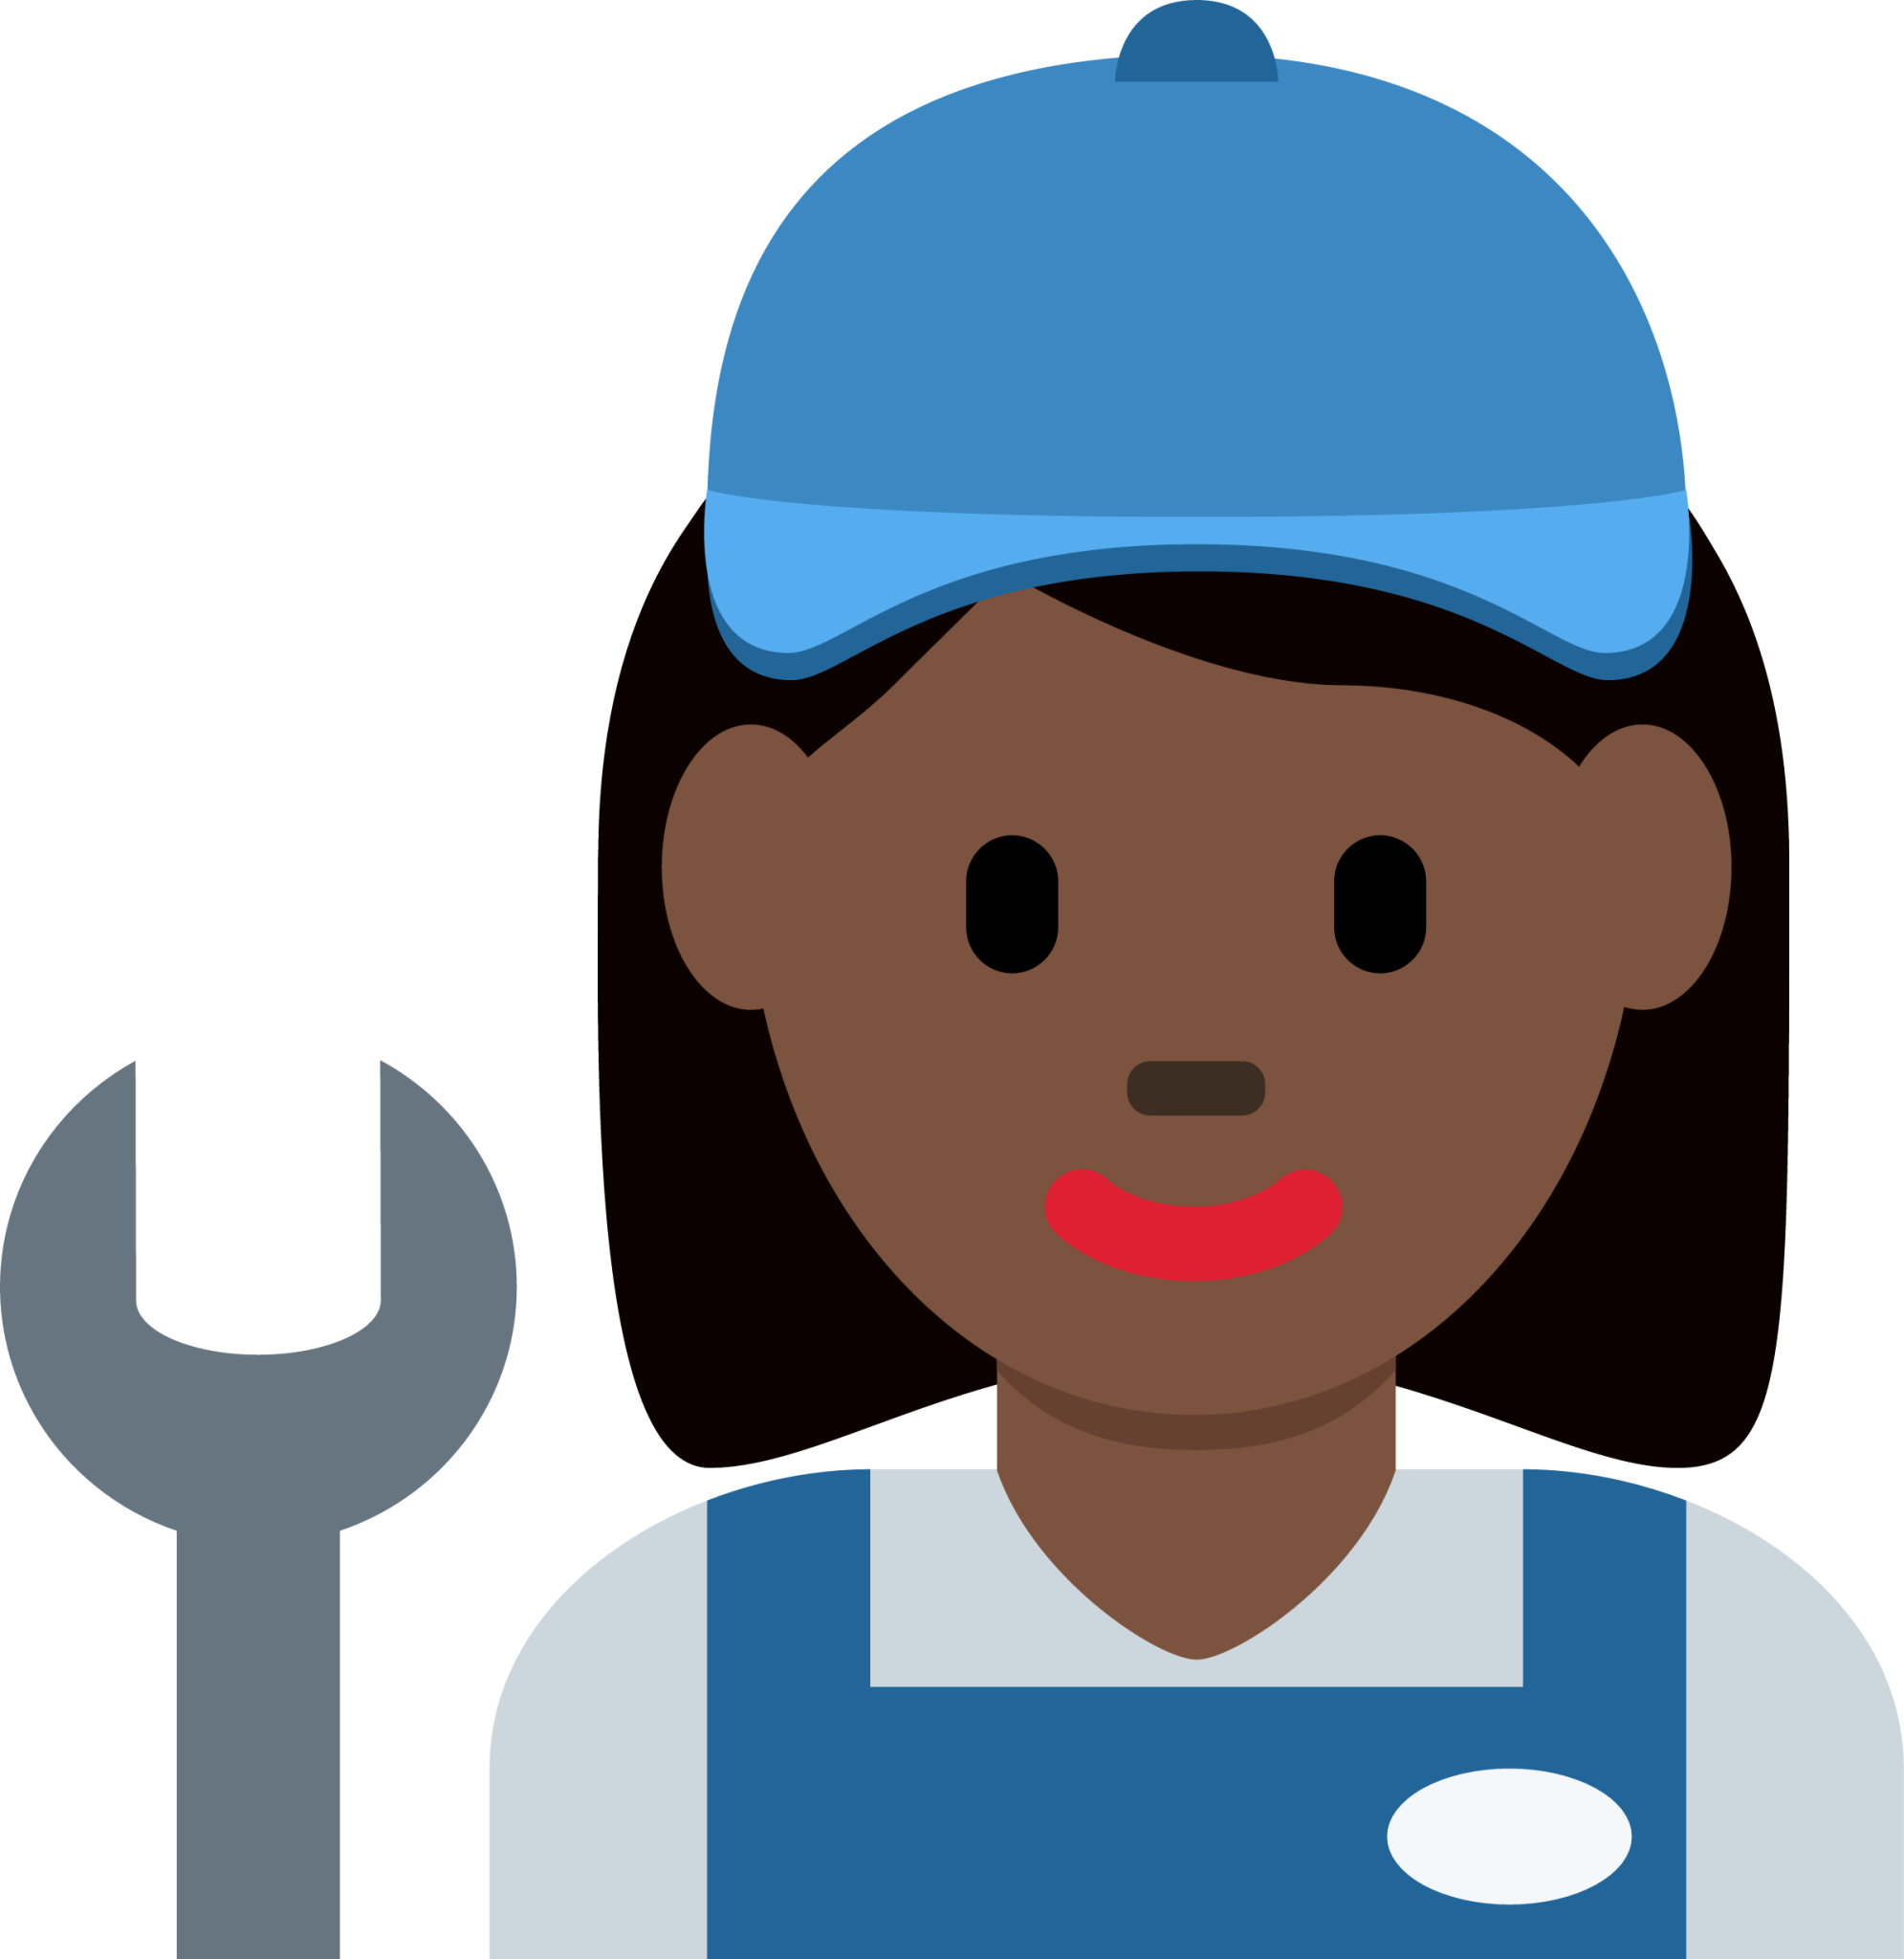 woman mechanic: dark skin tone emoji